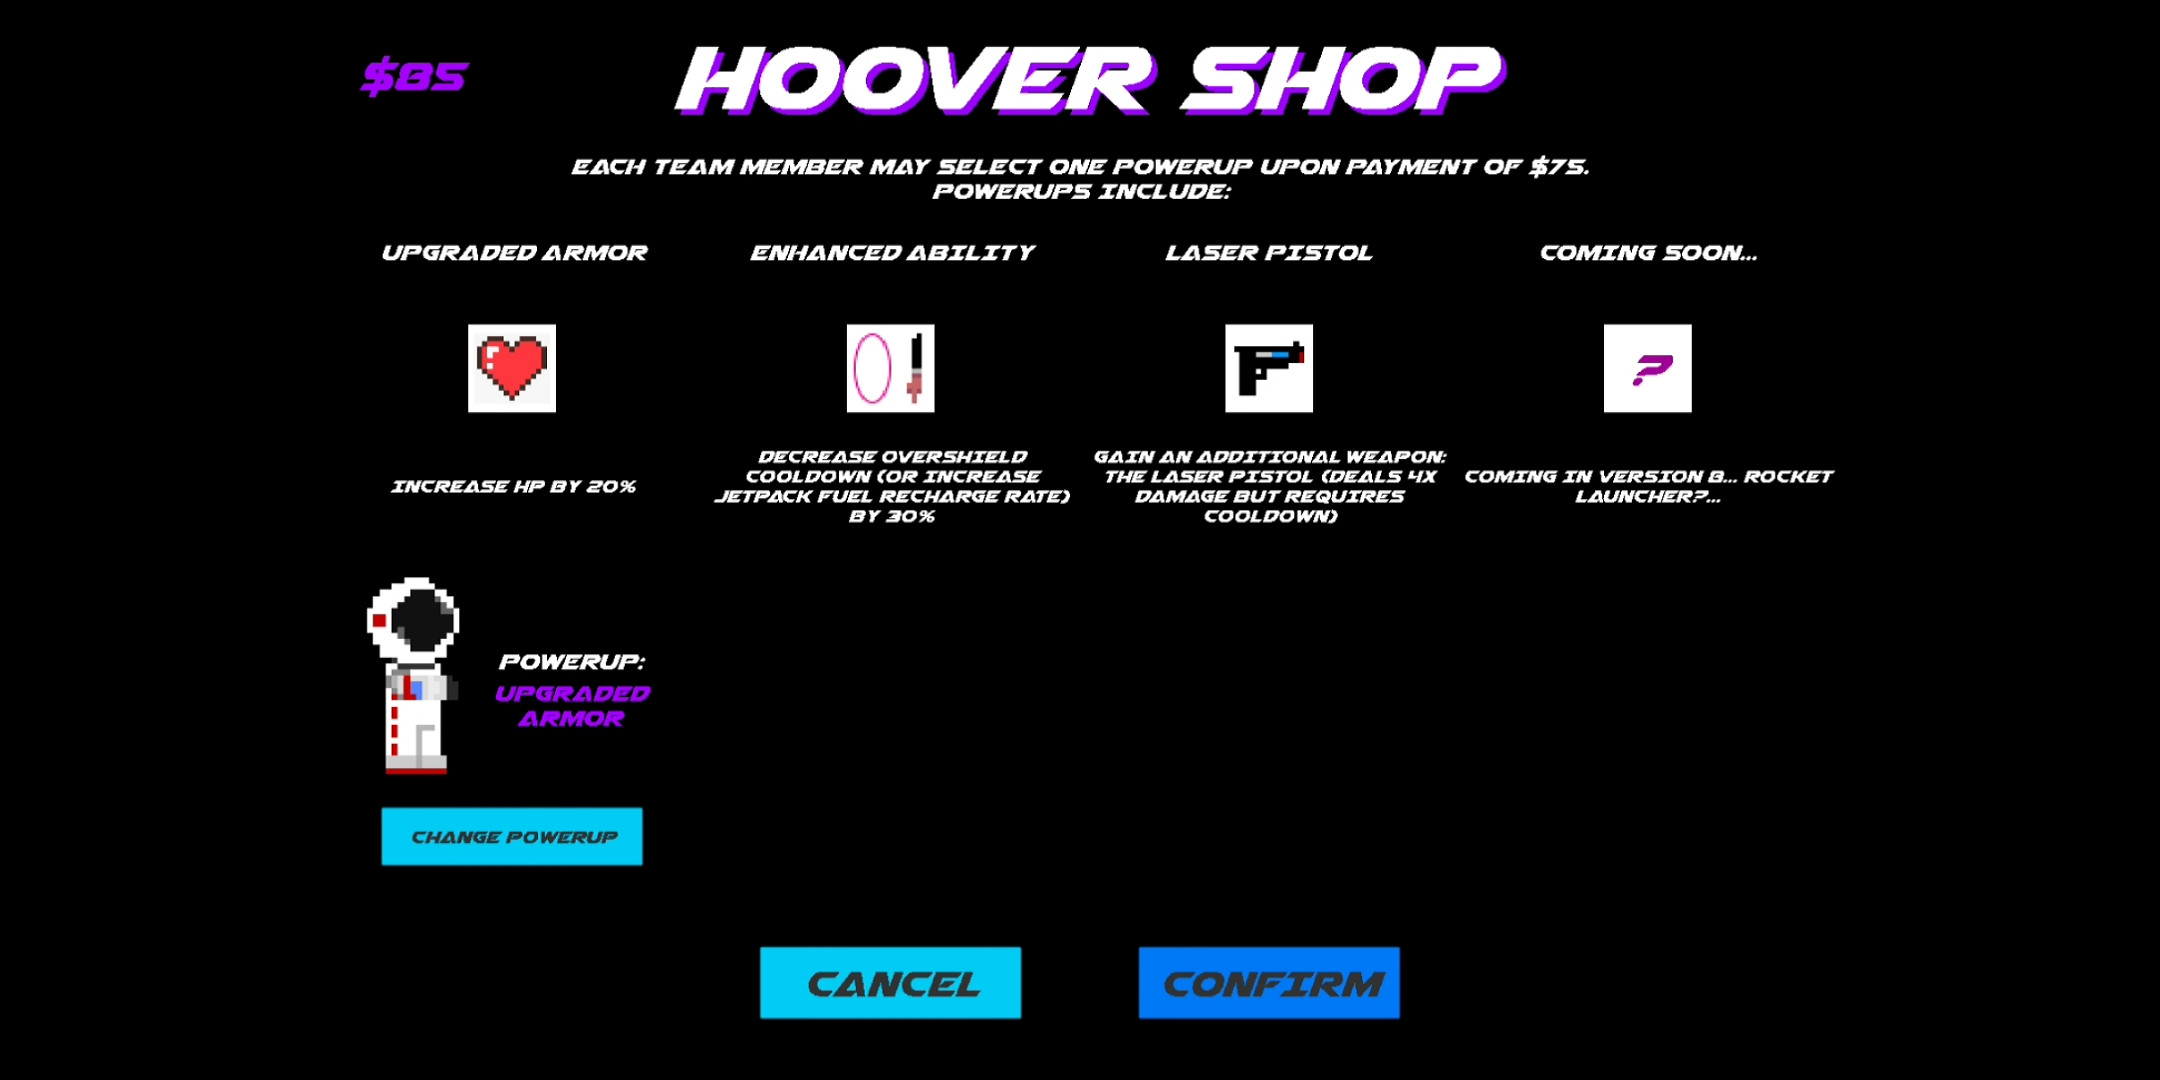 Hoovernauts screenshot